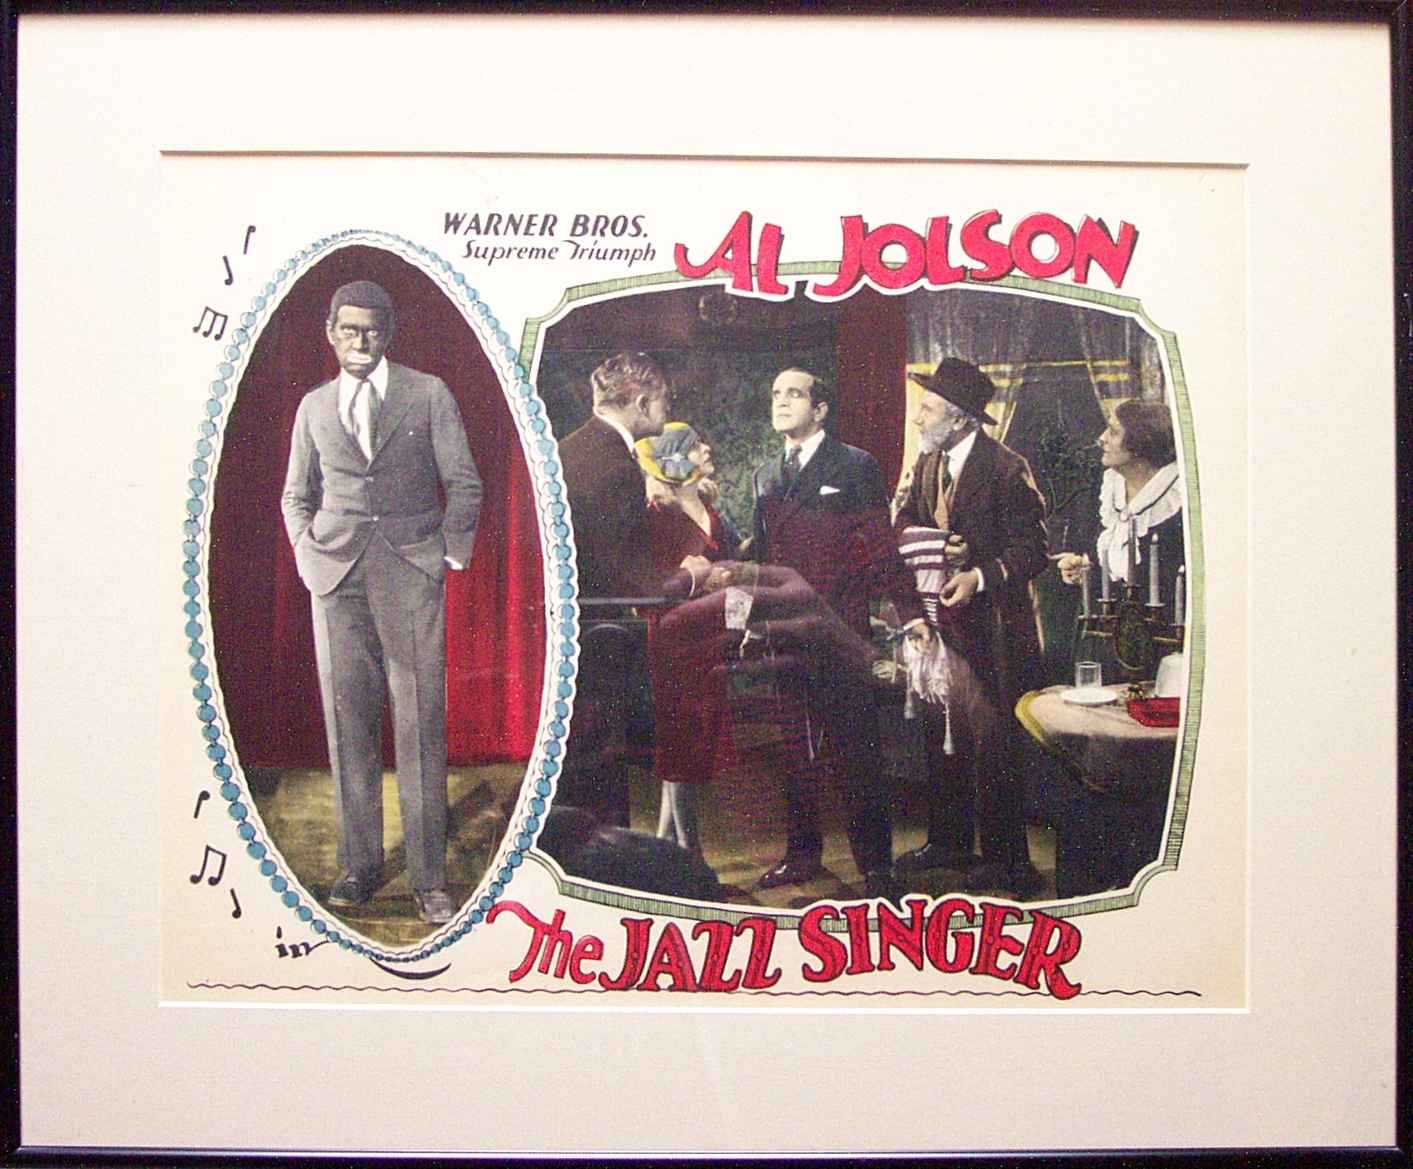 The Jazz Singer (1927)